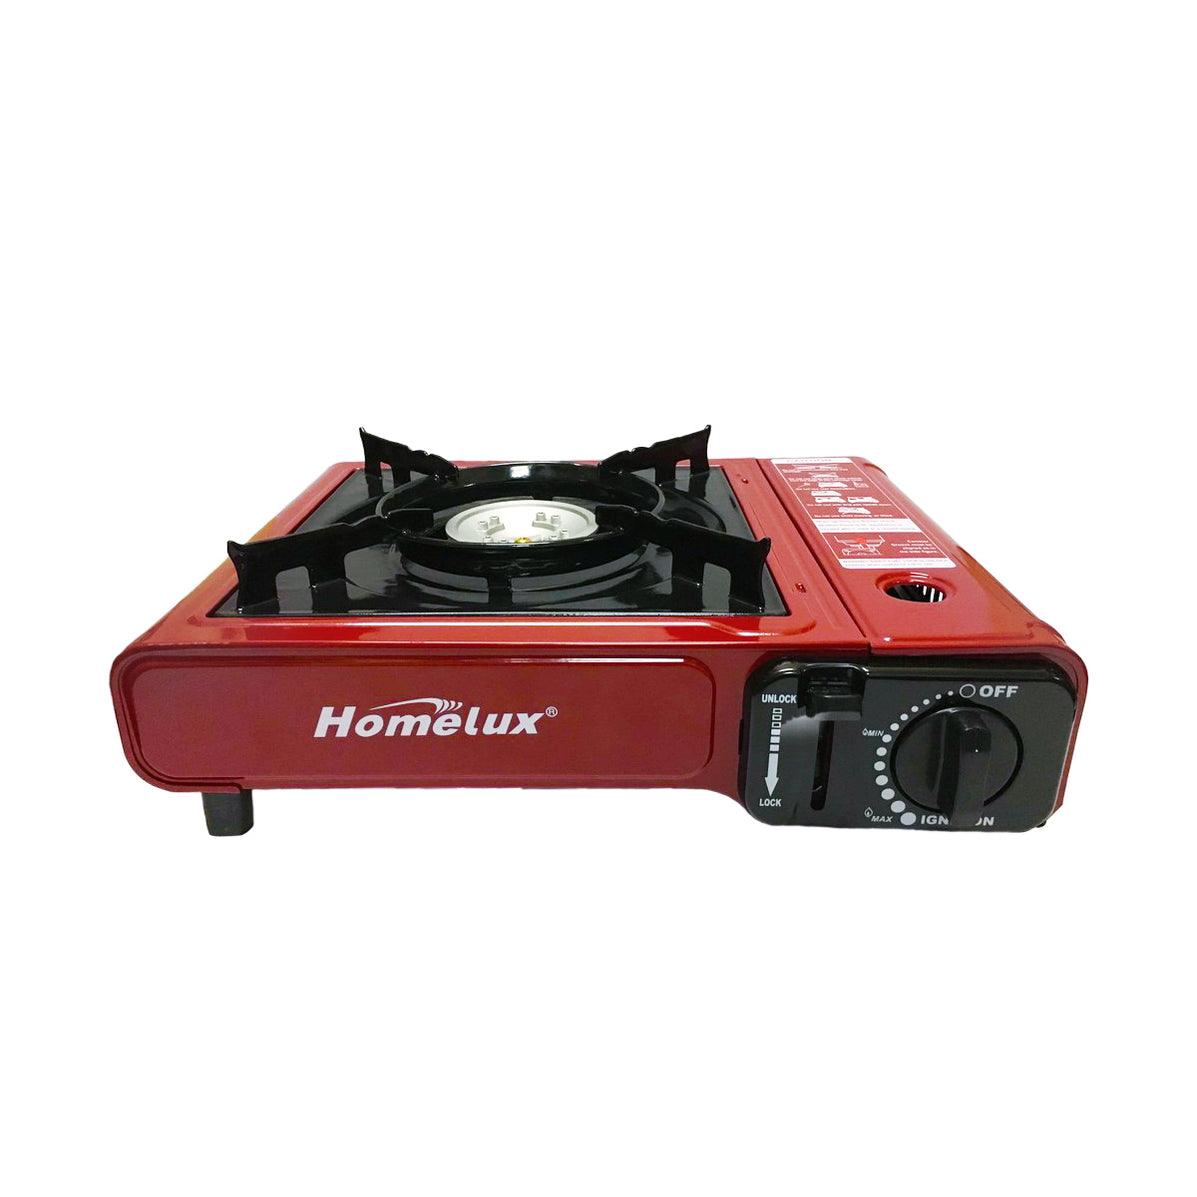 Homelux Portable Gas Stove HP-2002R — AlatDapur